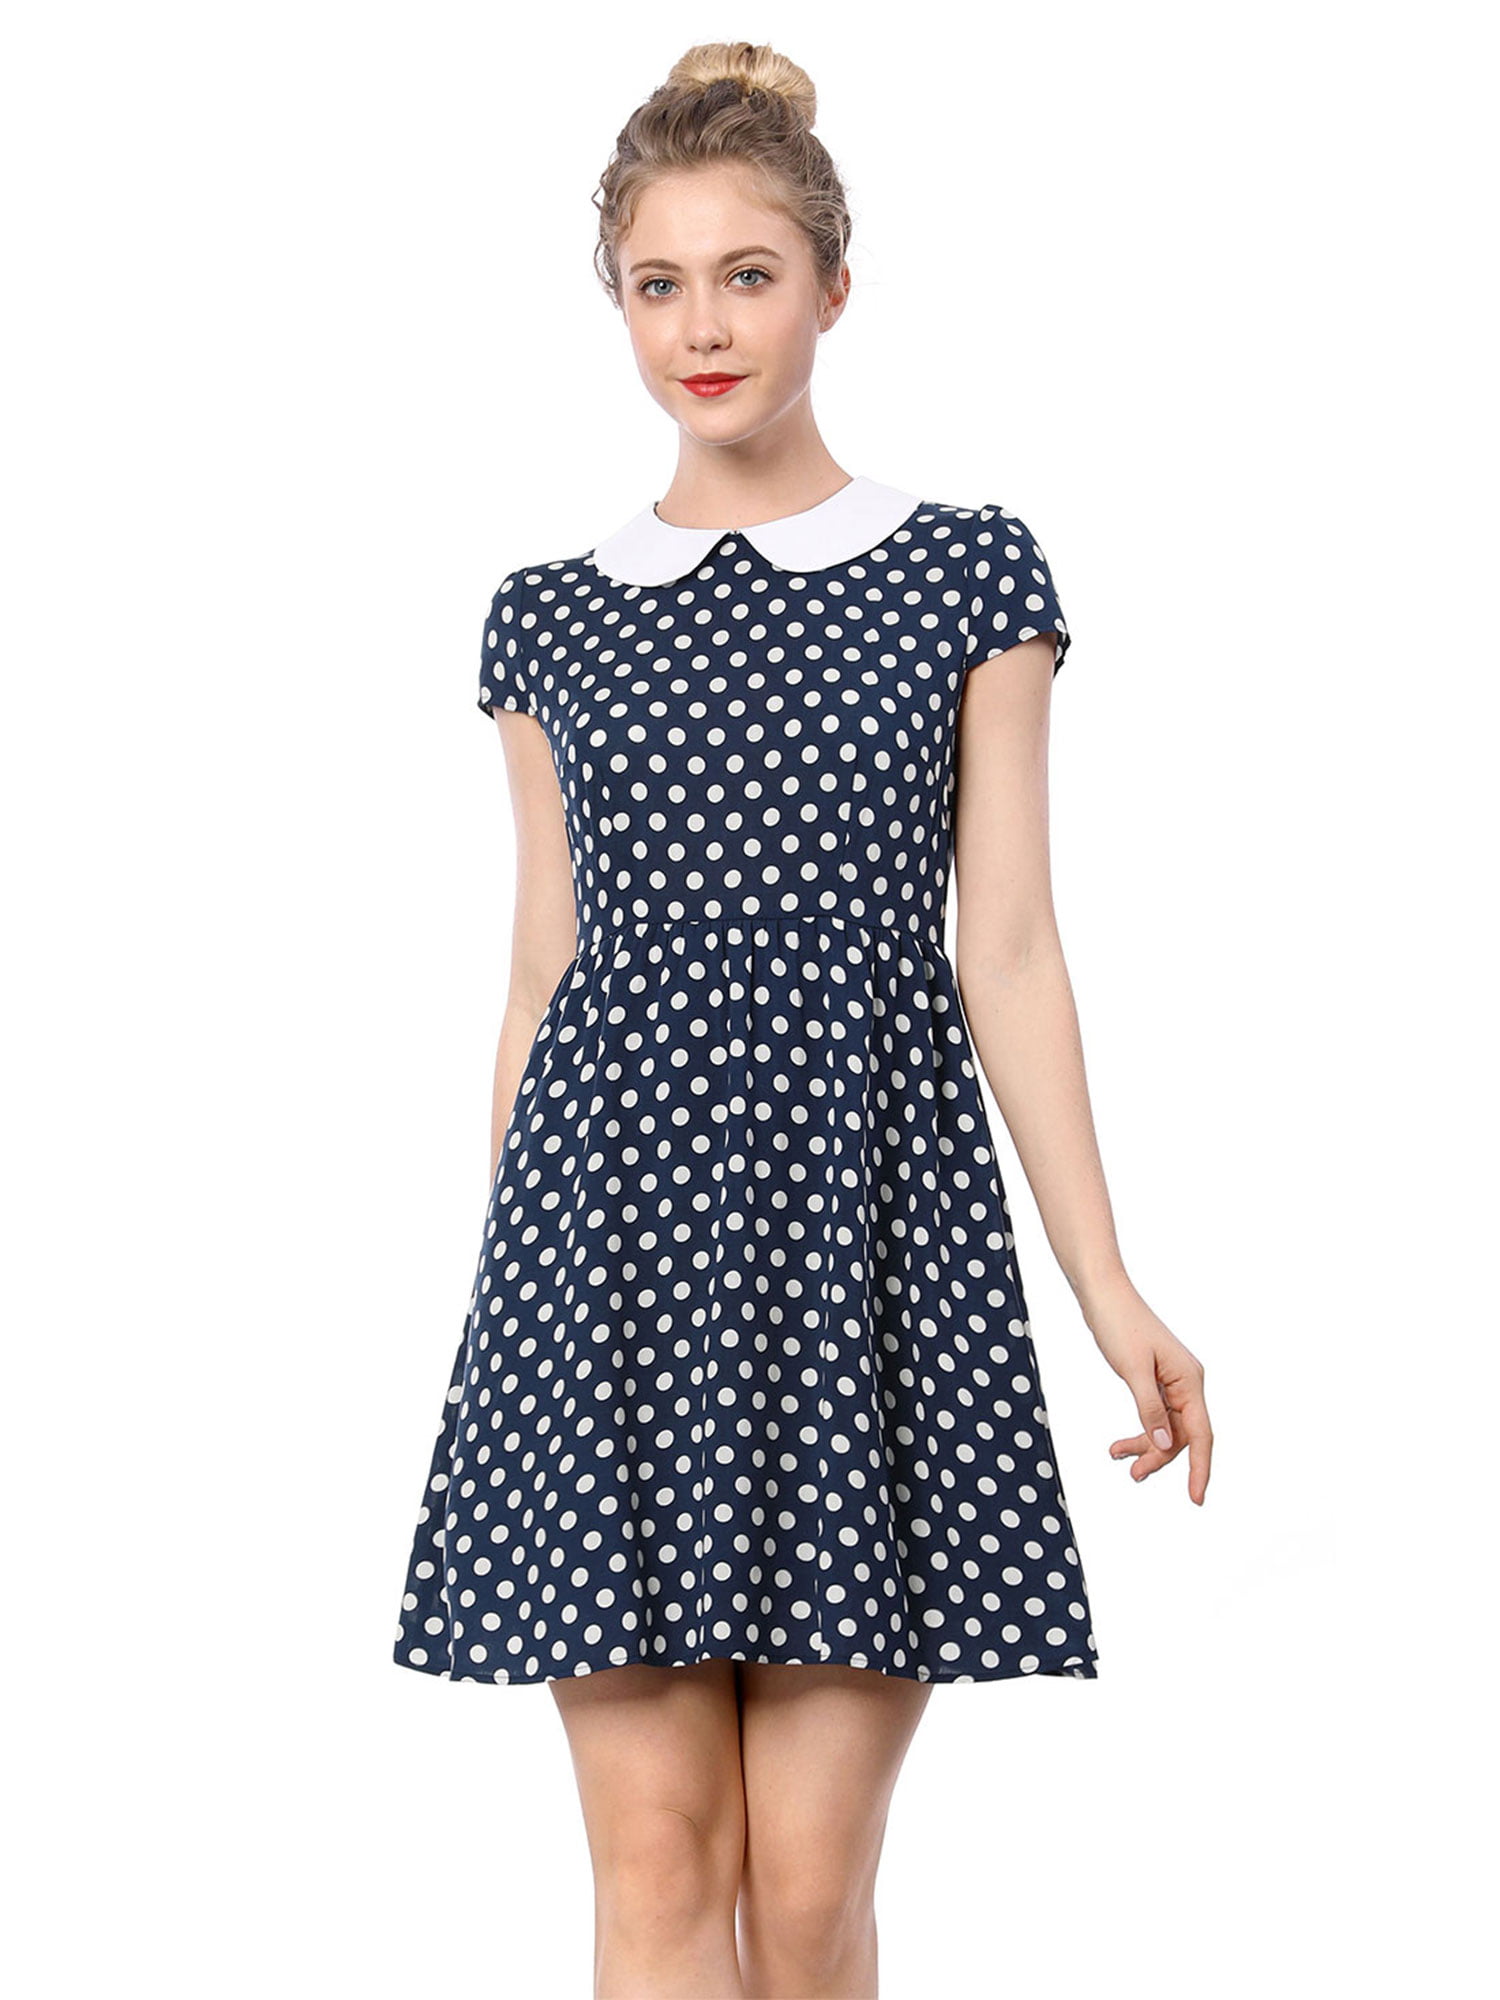 contrast polka dot flare dress